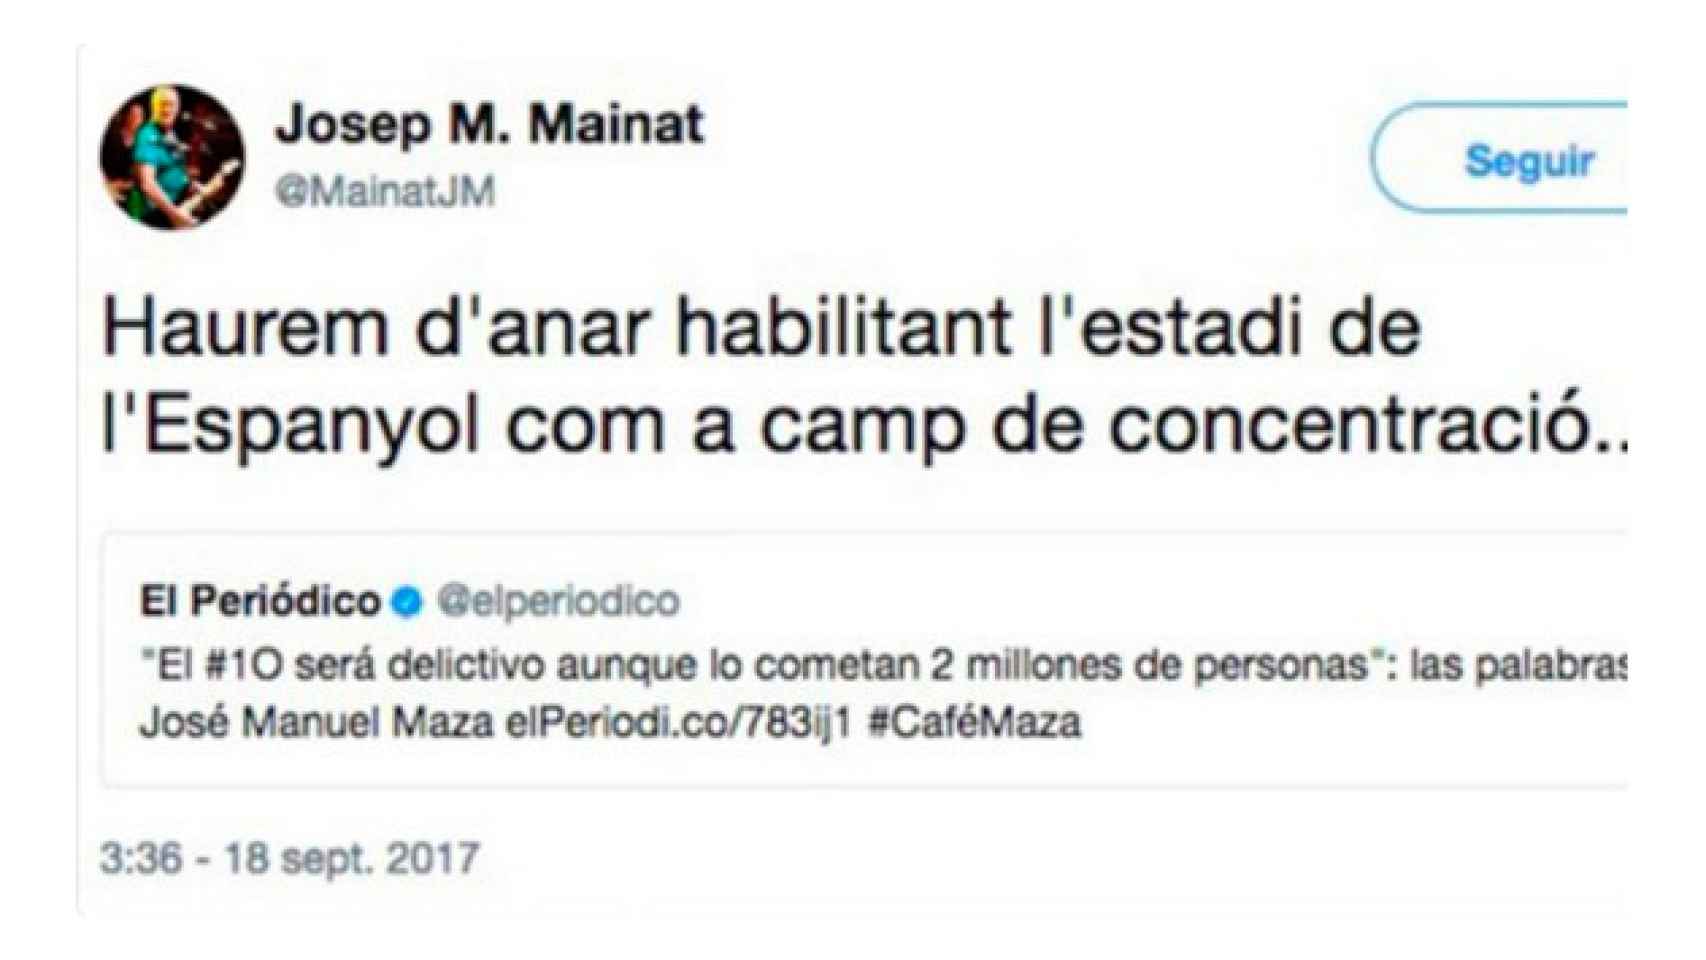 El polémico tuit de Josep Maria Mainat